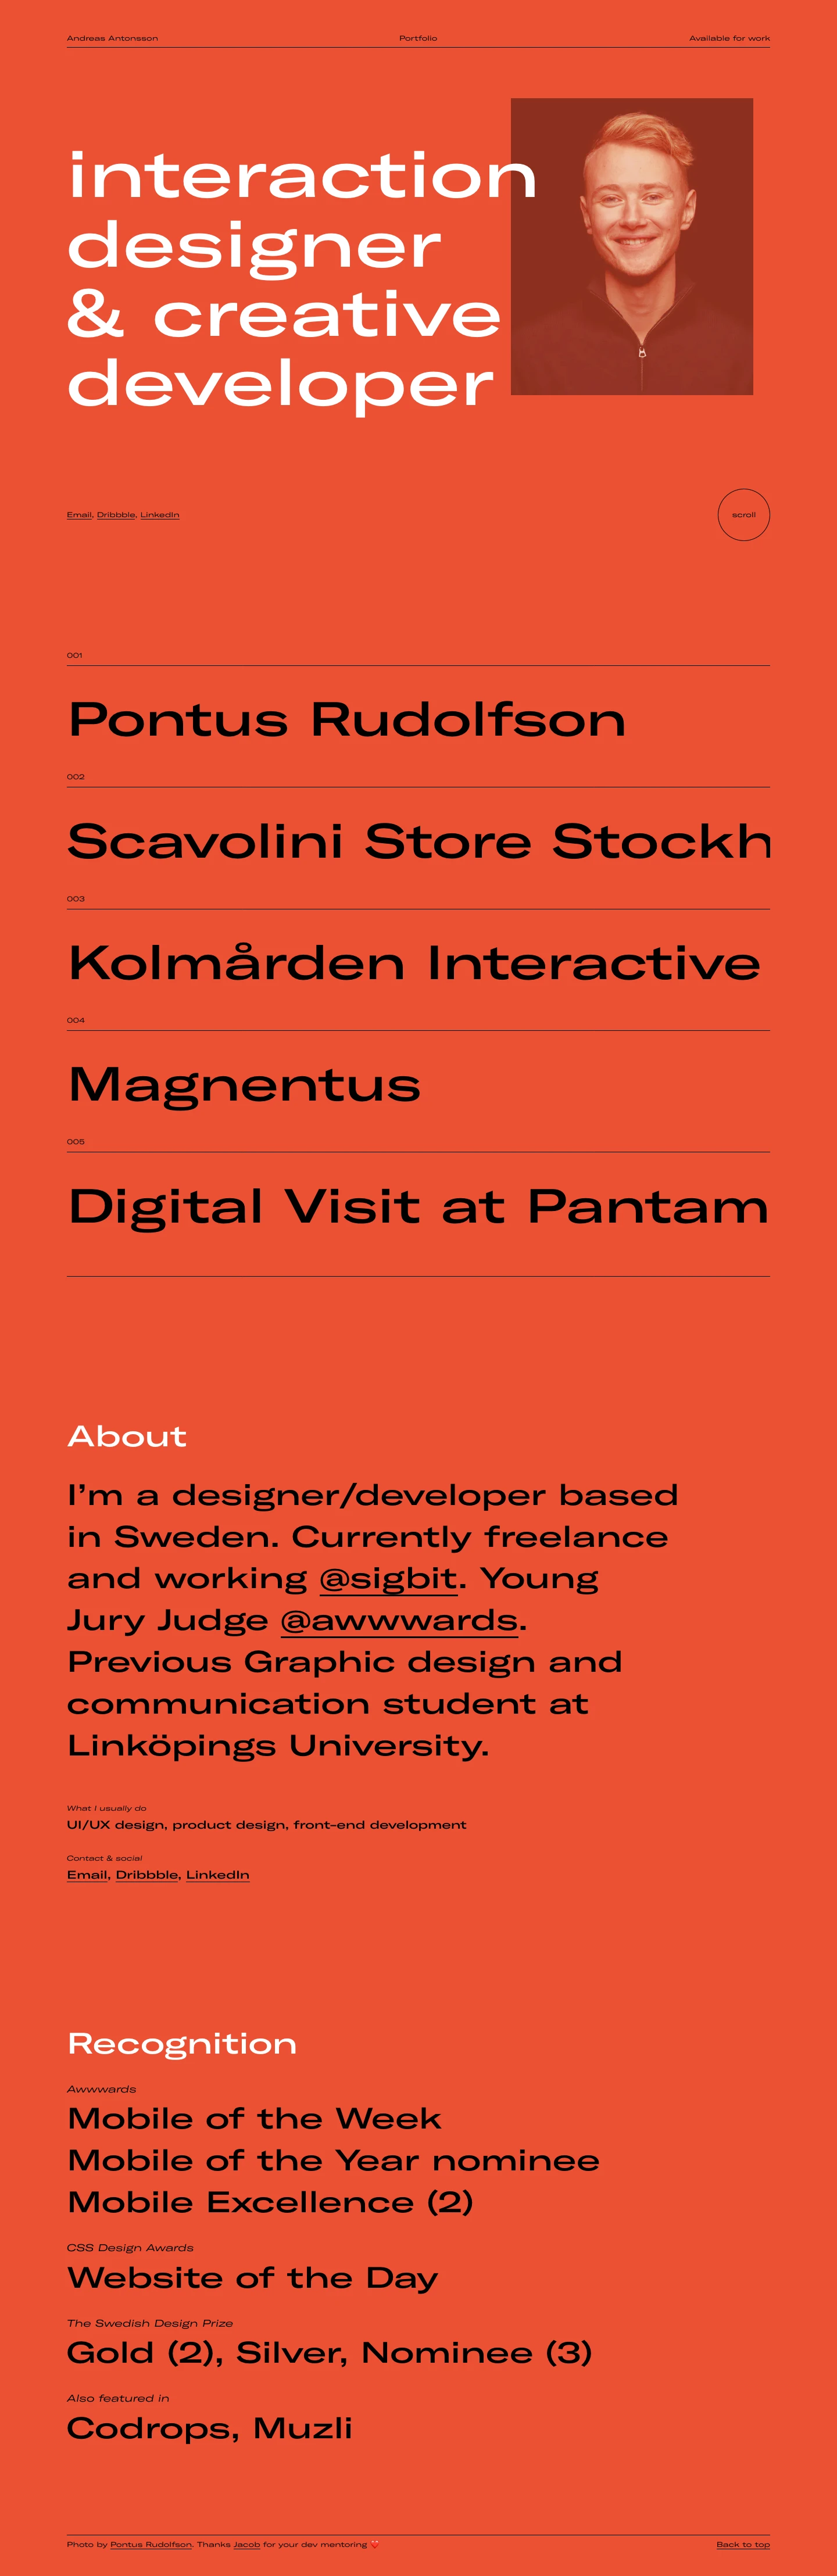 Andreas Antonsson Landing Page Example: Interaction Designer & Creative Developer